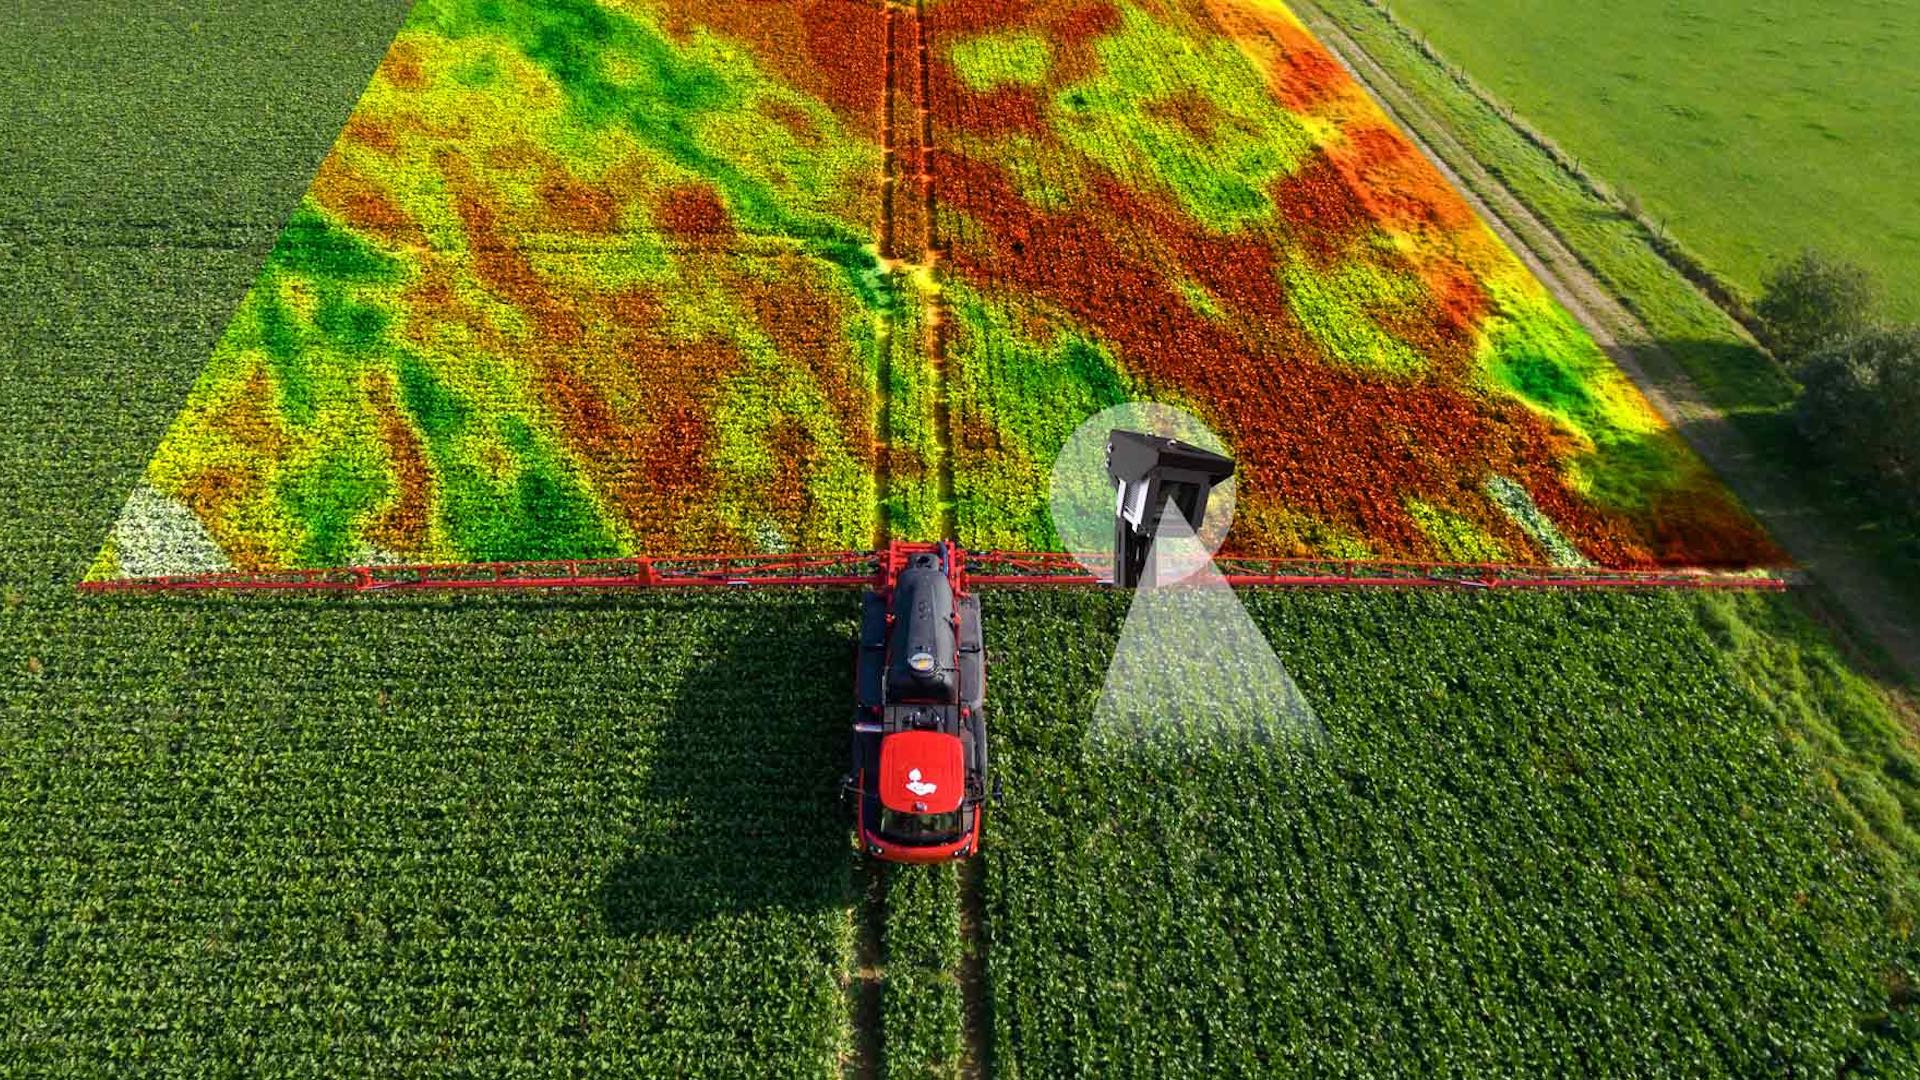 future of farming is using sensors